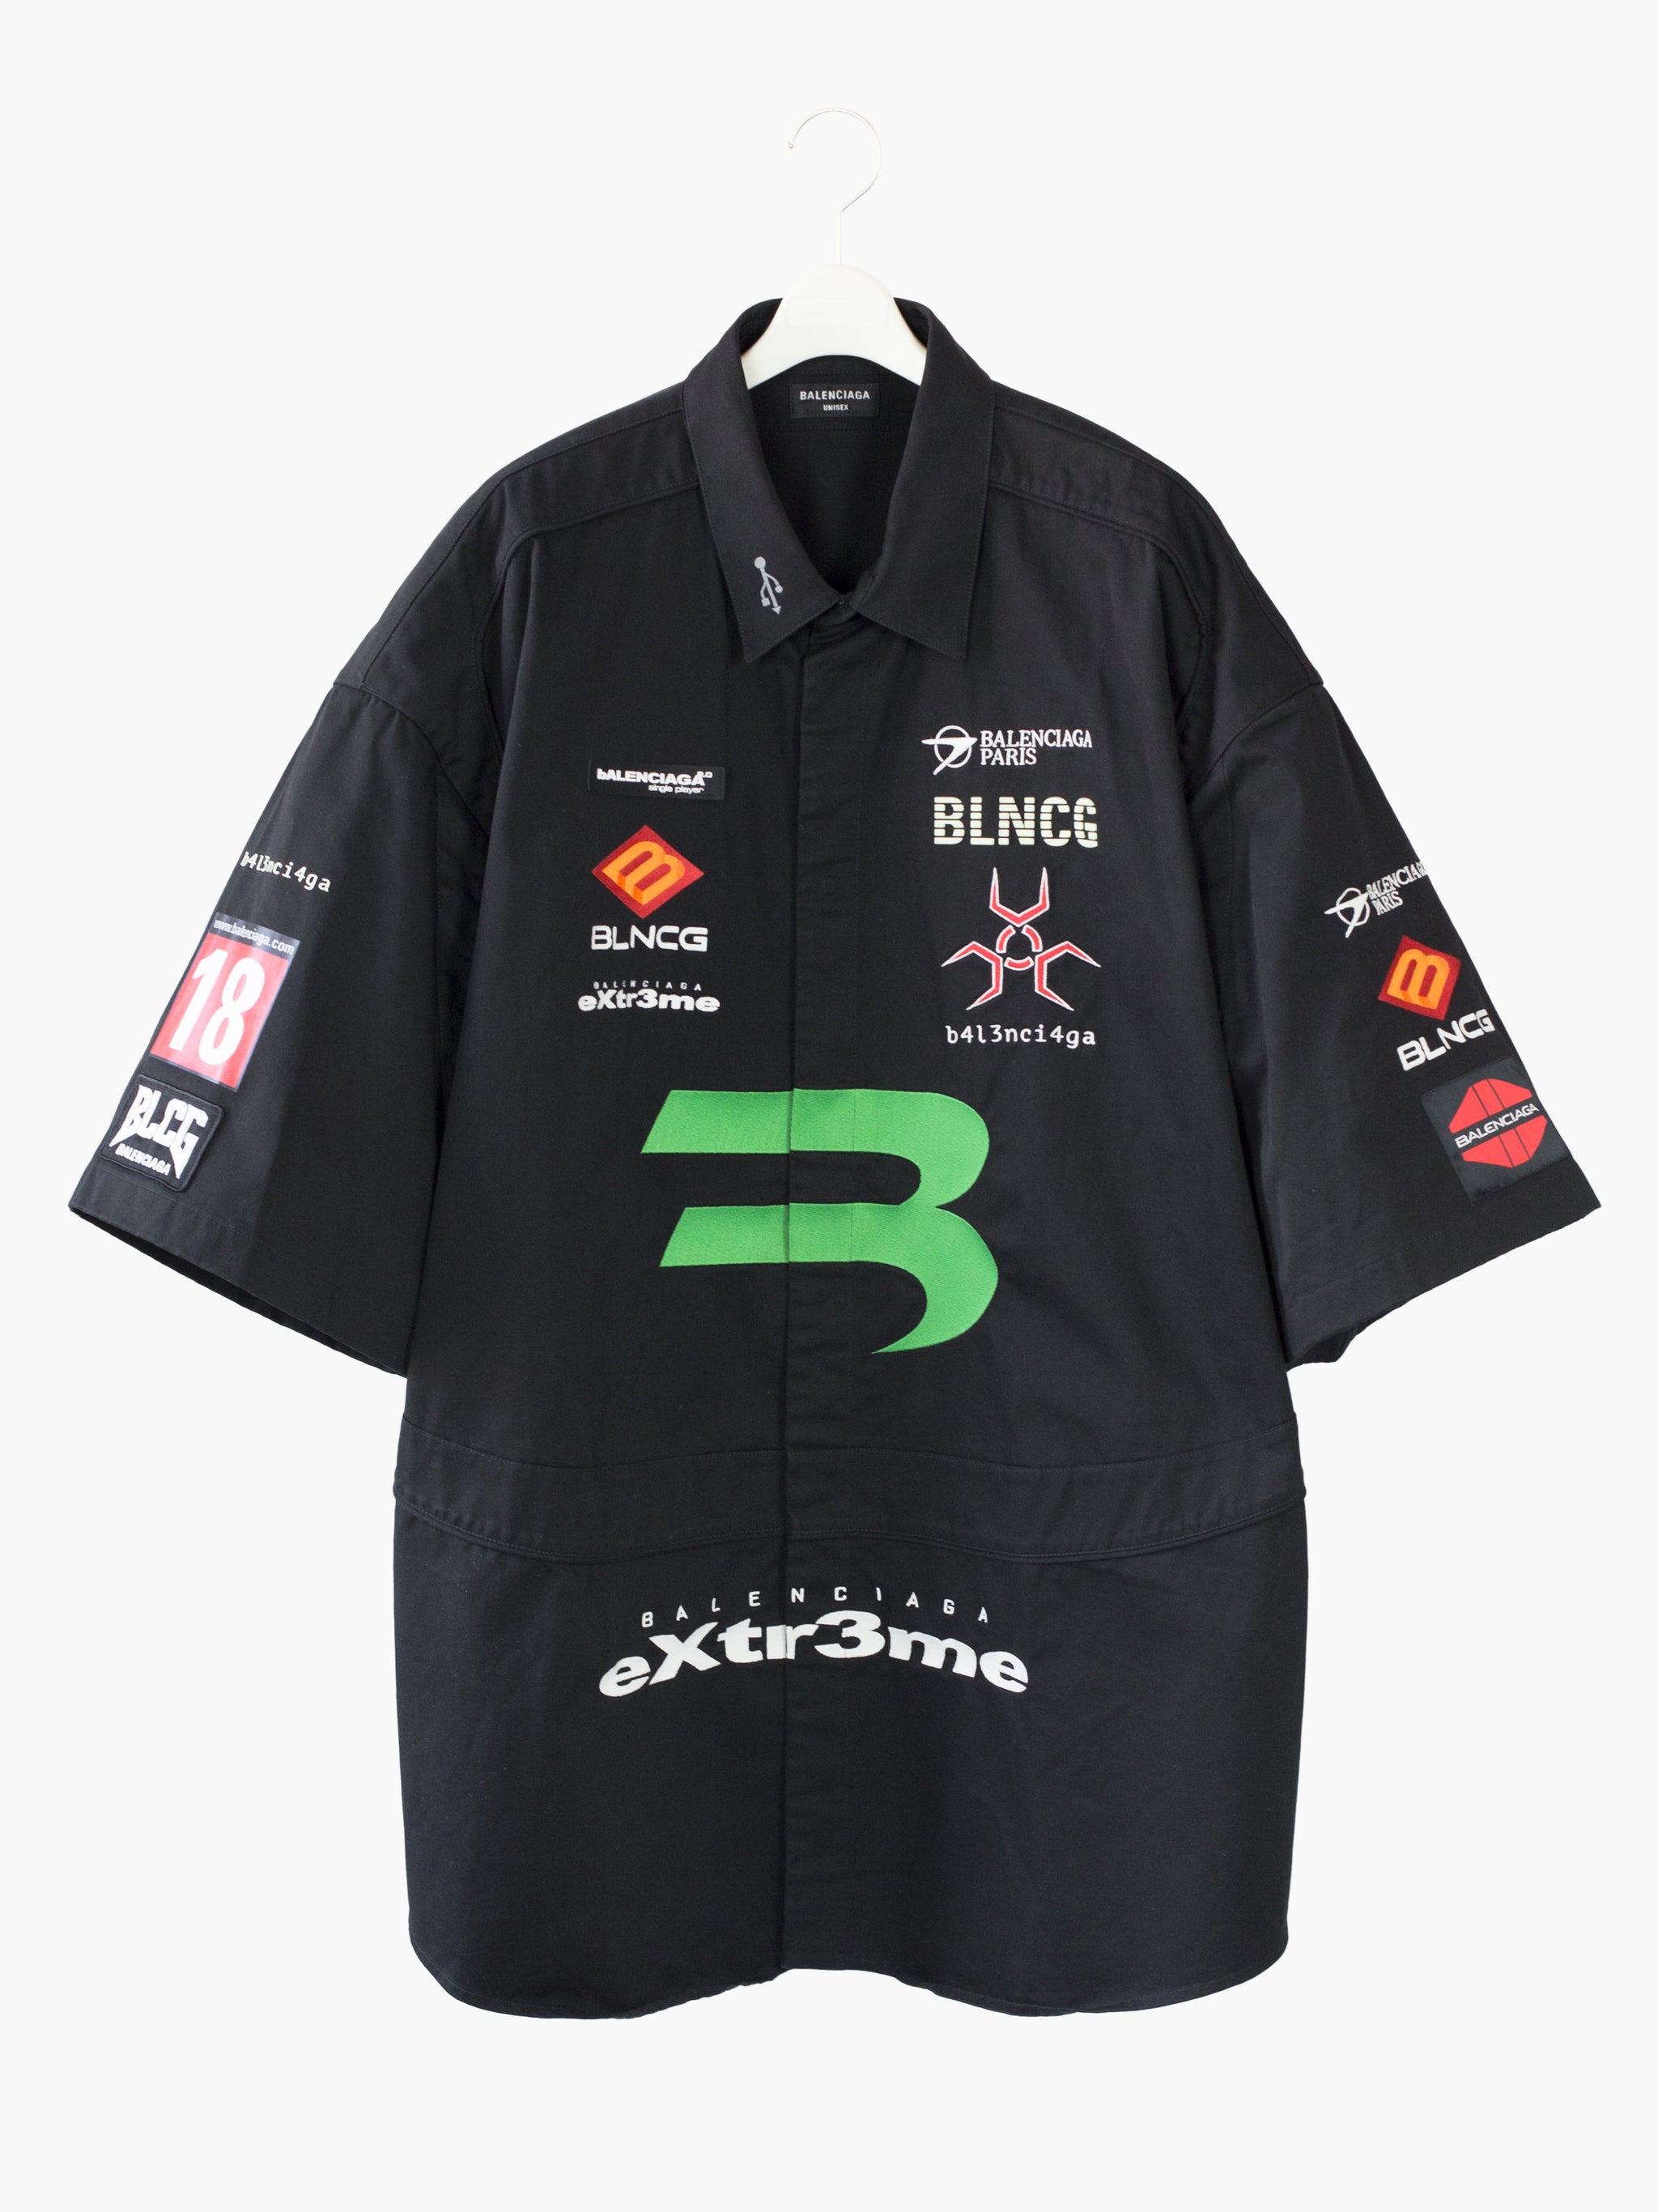 Balenciaga Gamer Extreme Short Sleeve Cotton Shirt in Black 38EU= M US